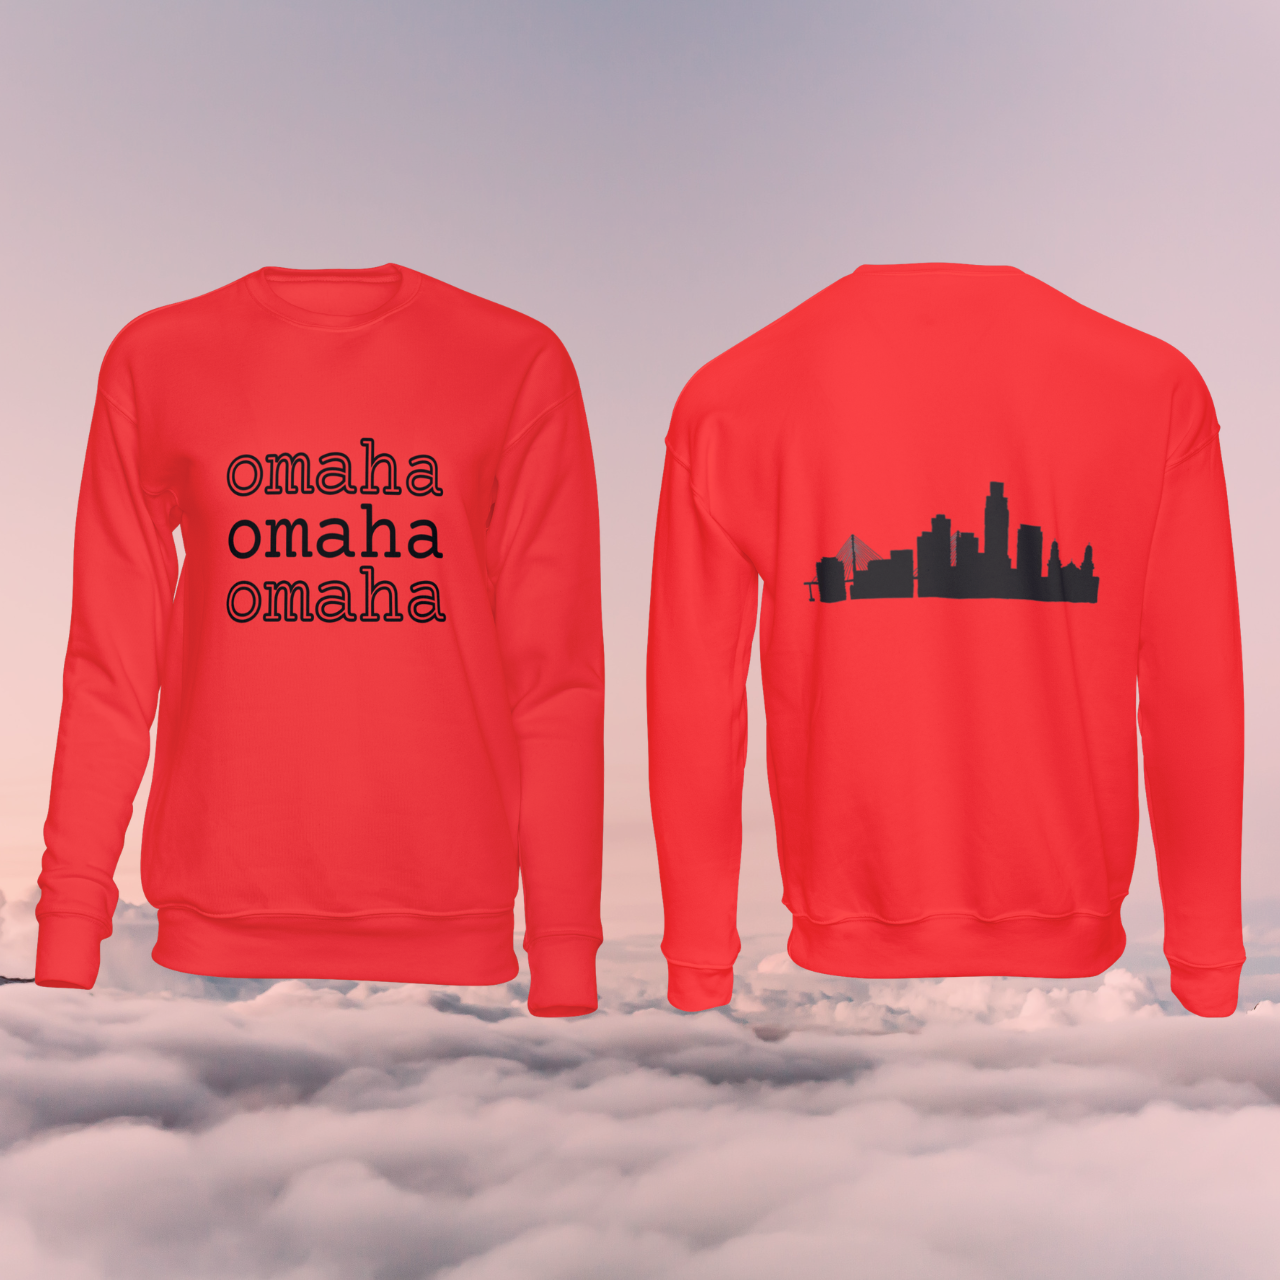 Omaha Short Sleeve T-Shirt